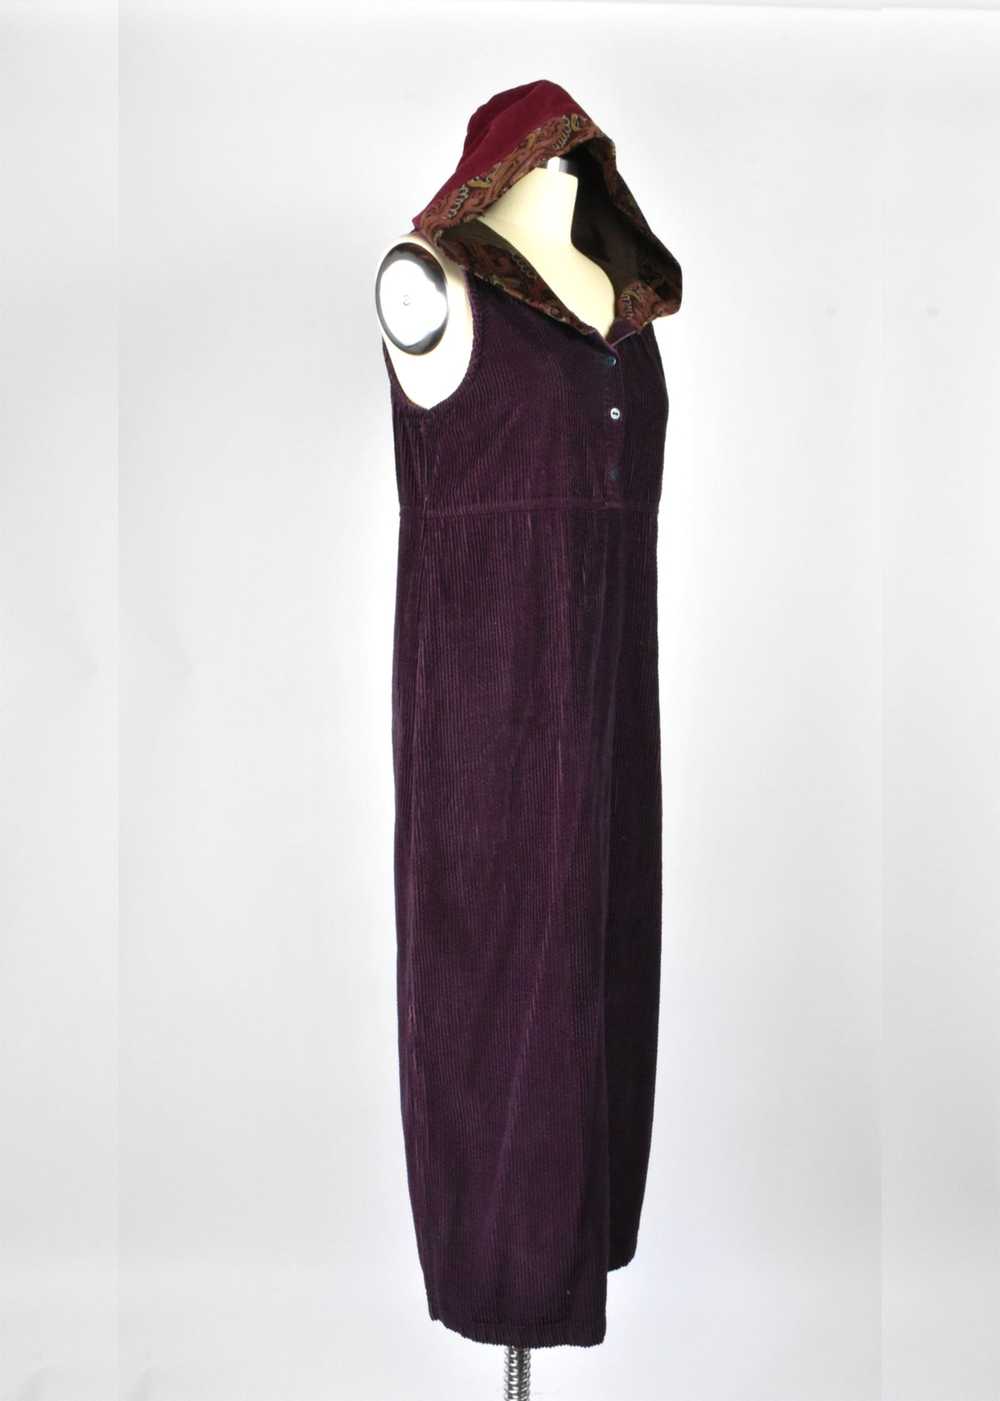 1990's Sleeveless Corduroy Dress with Hood - image 3